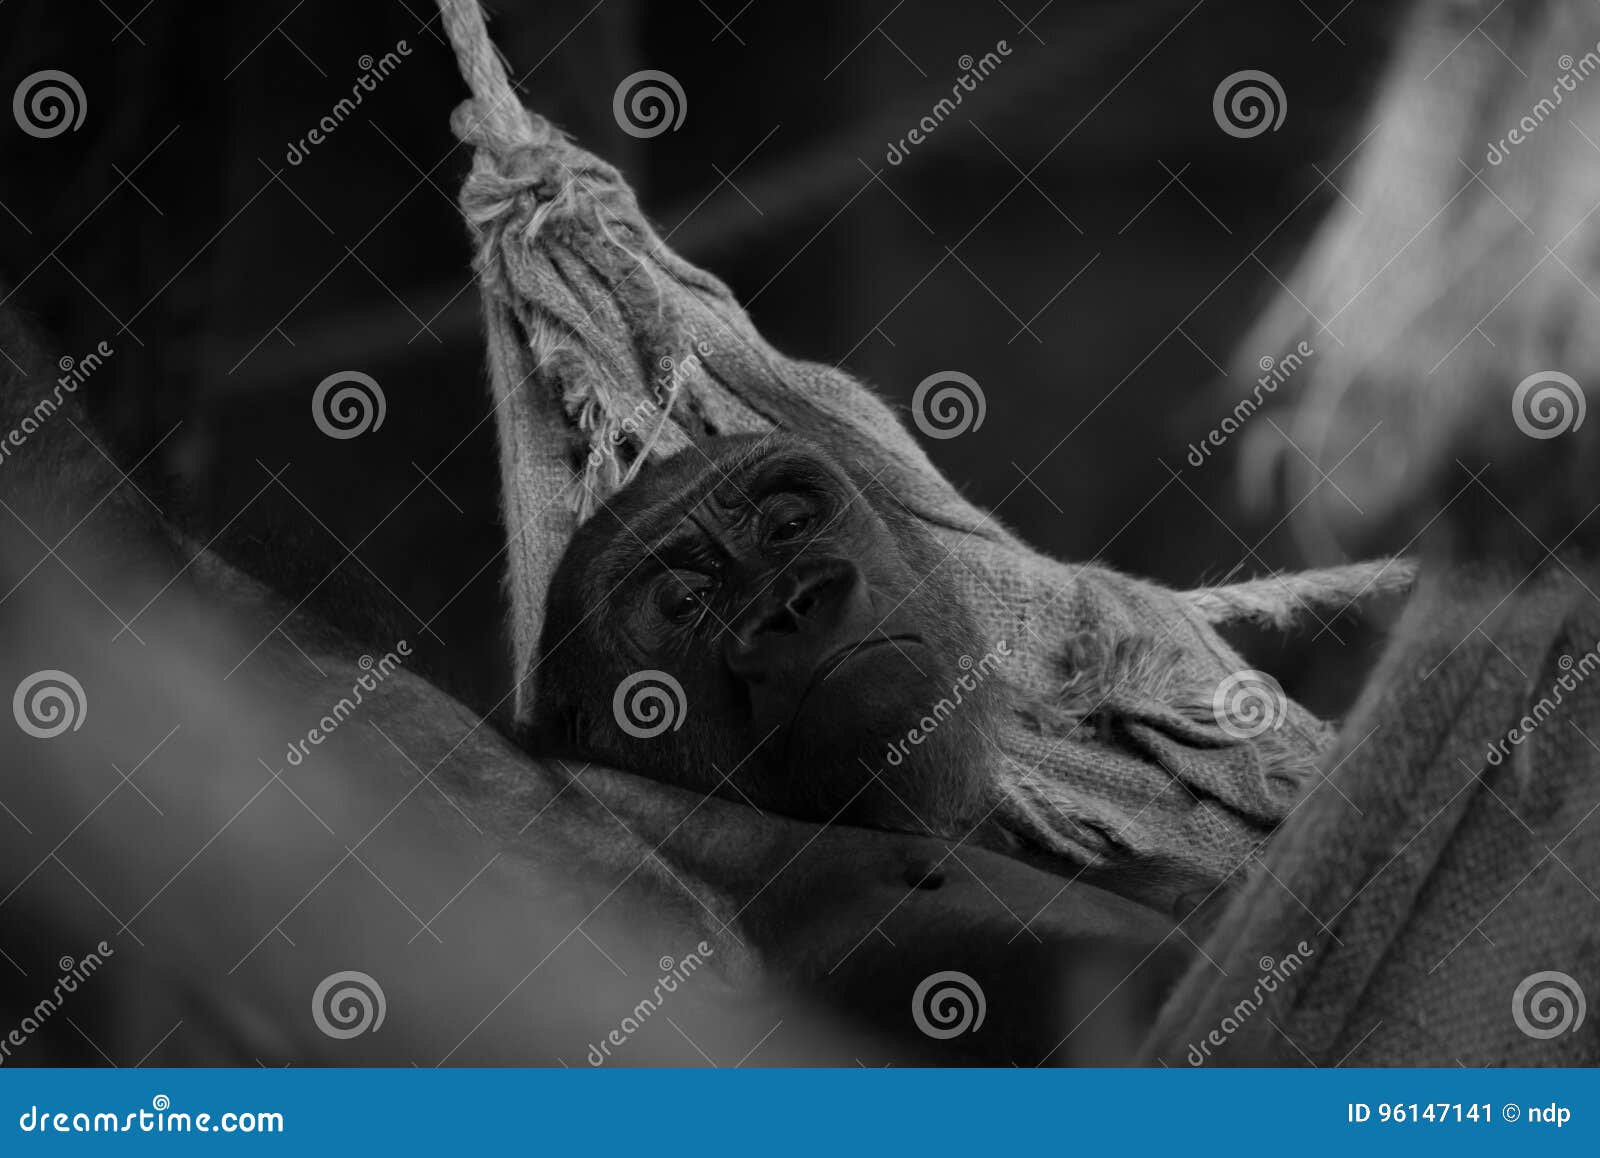 mono gorilla lying in hammock looking up